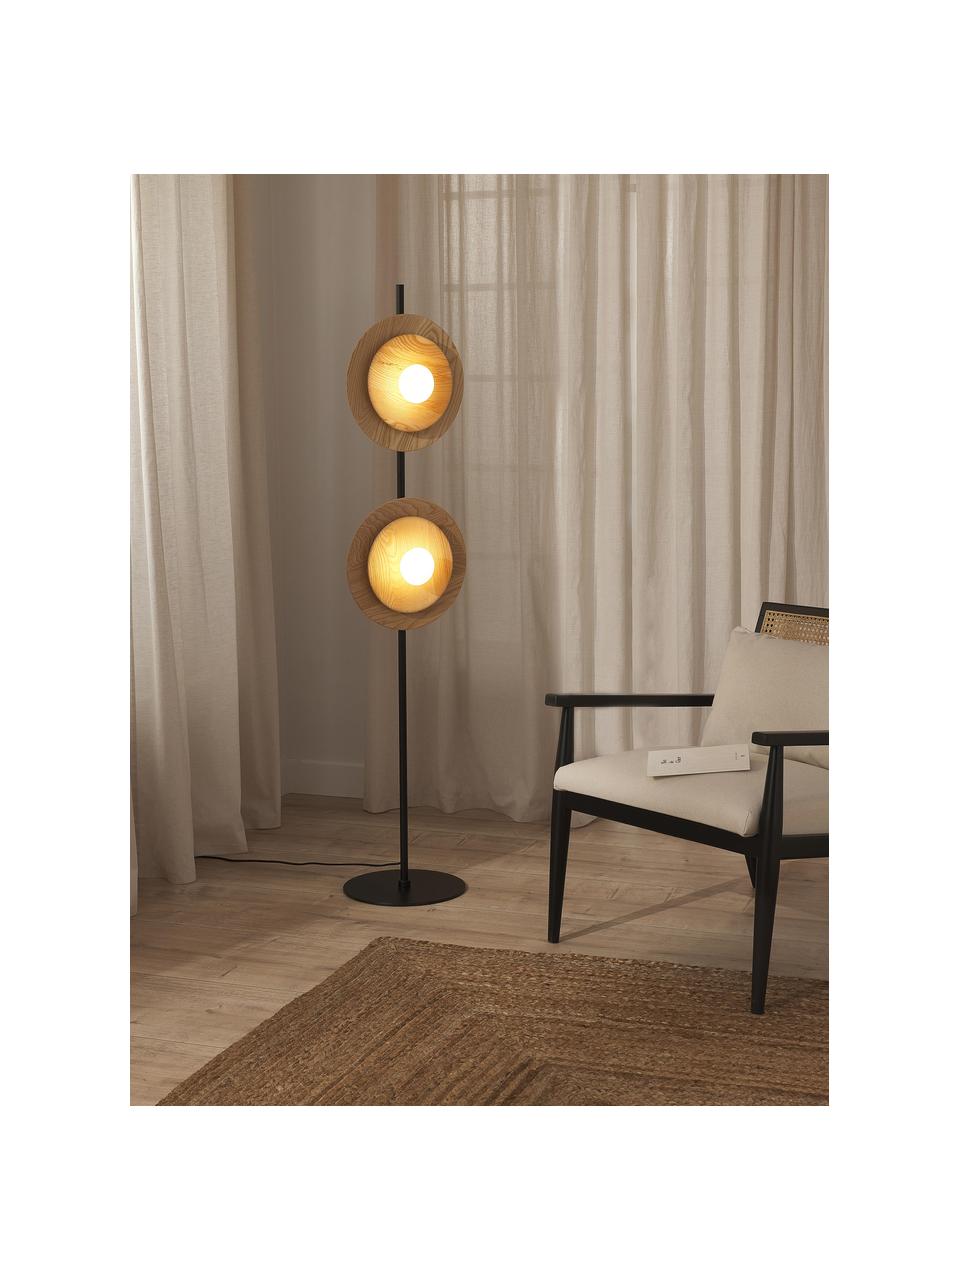 Verstelbare vloerlamp Zadie van essenhout, Decoratie: 100% essenhout, Essenhout, zwart, H 145cm